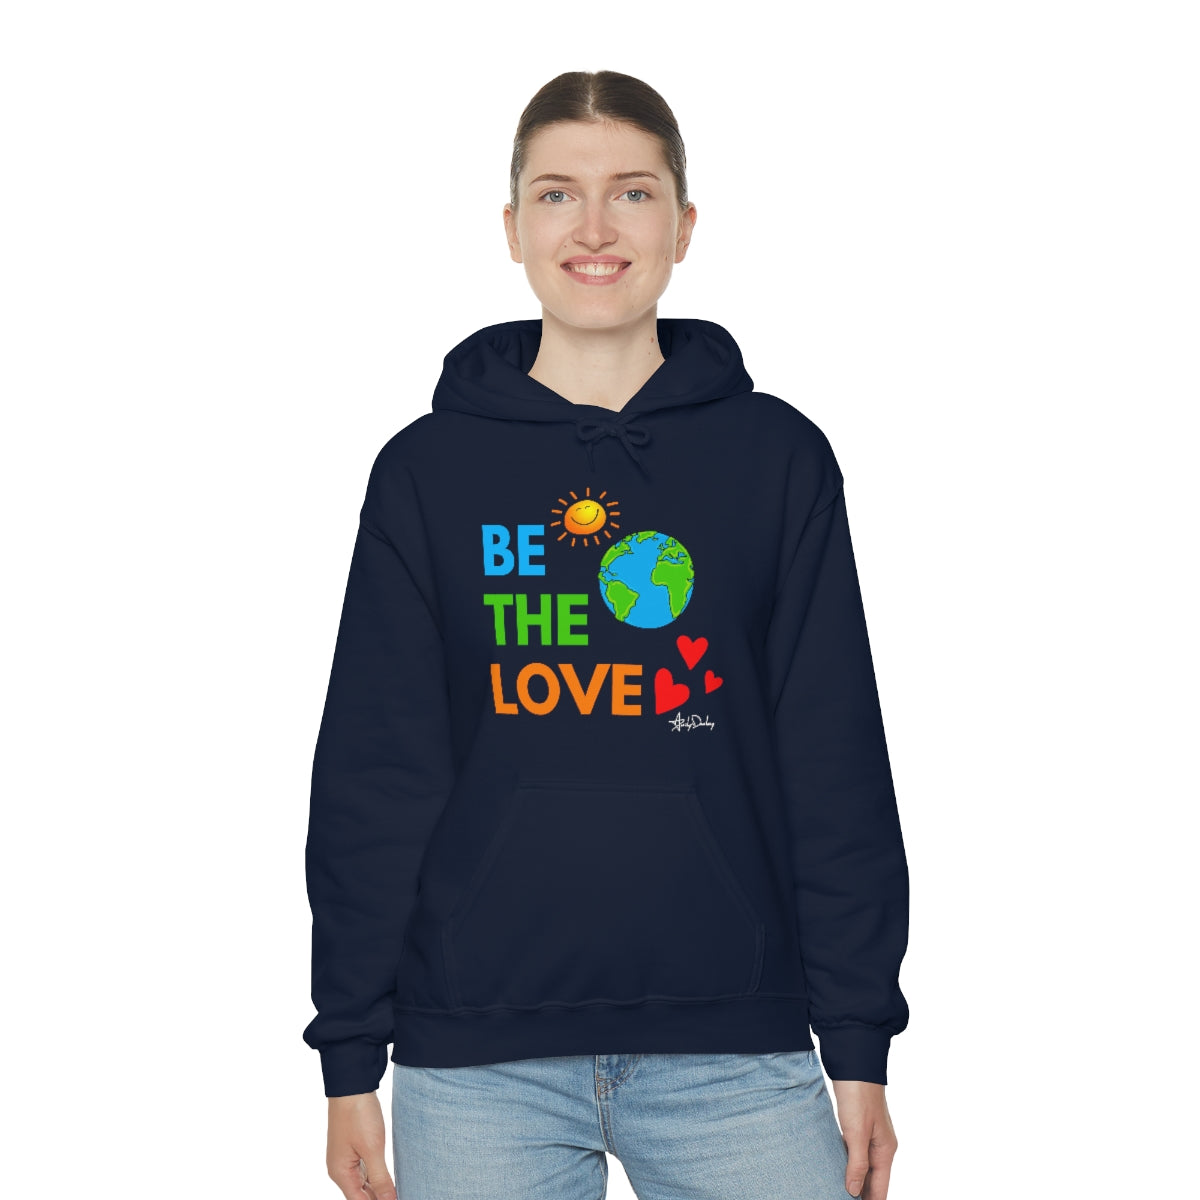 Be The Love! Hooded Sweatshirt